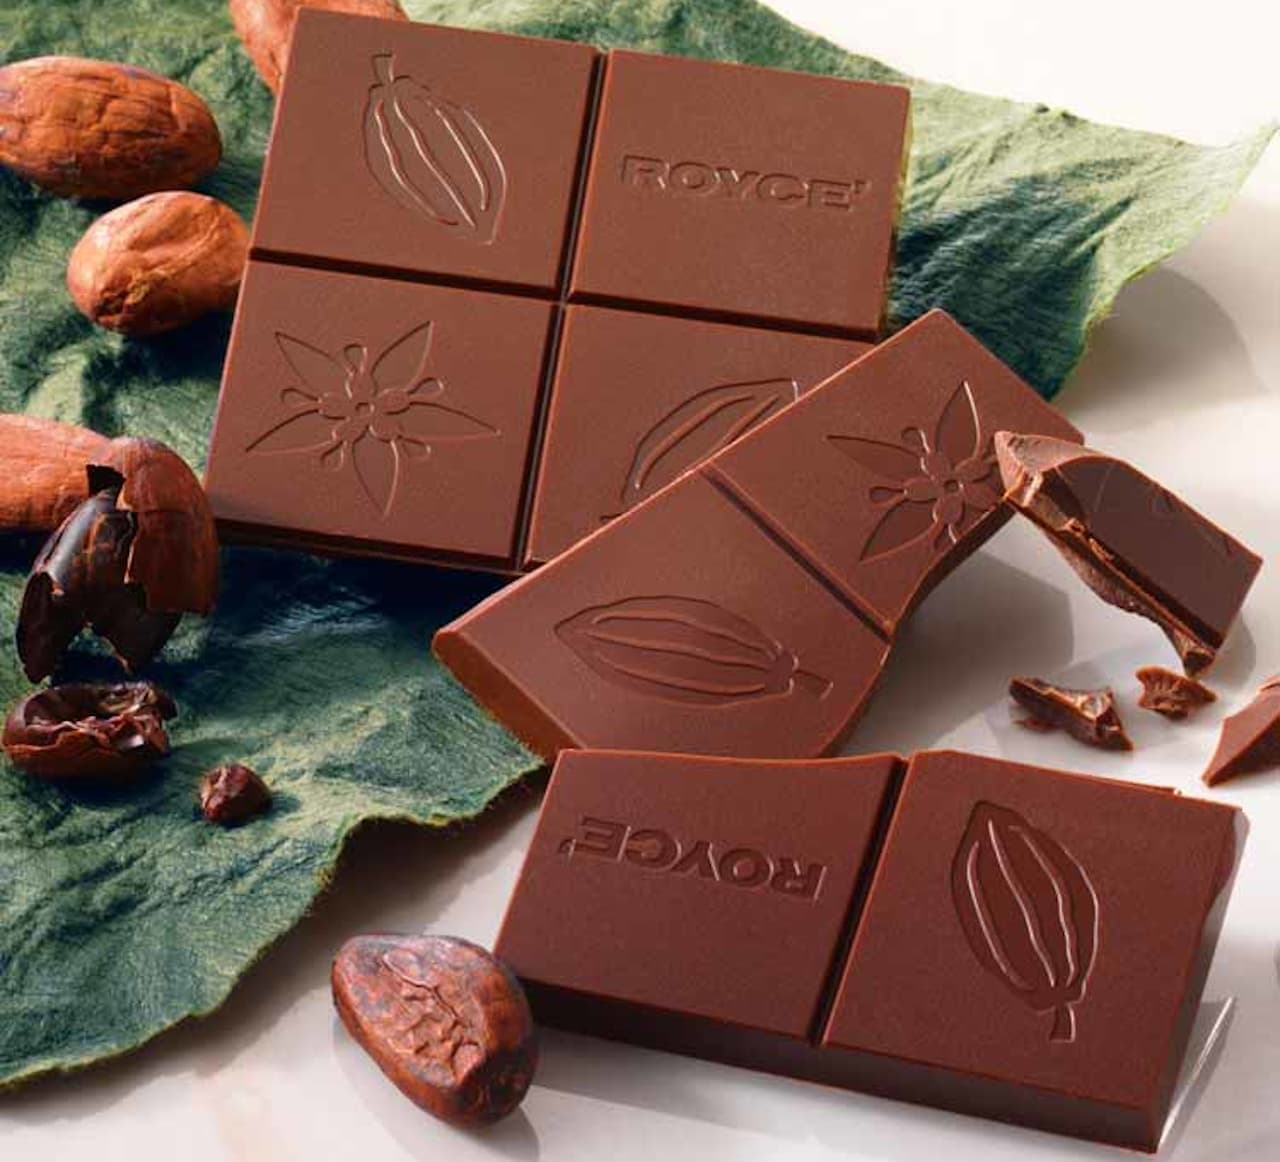 Lloyds' Valentine Limited Chocolate